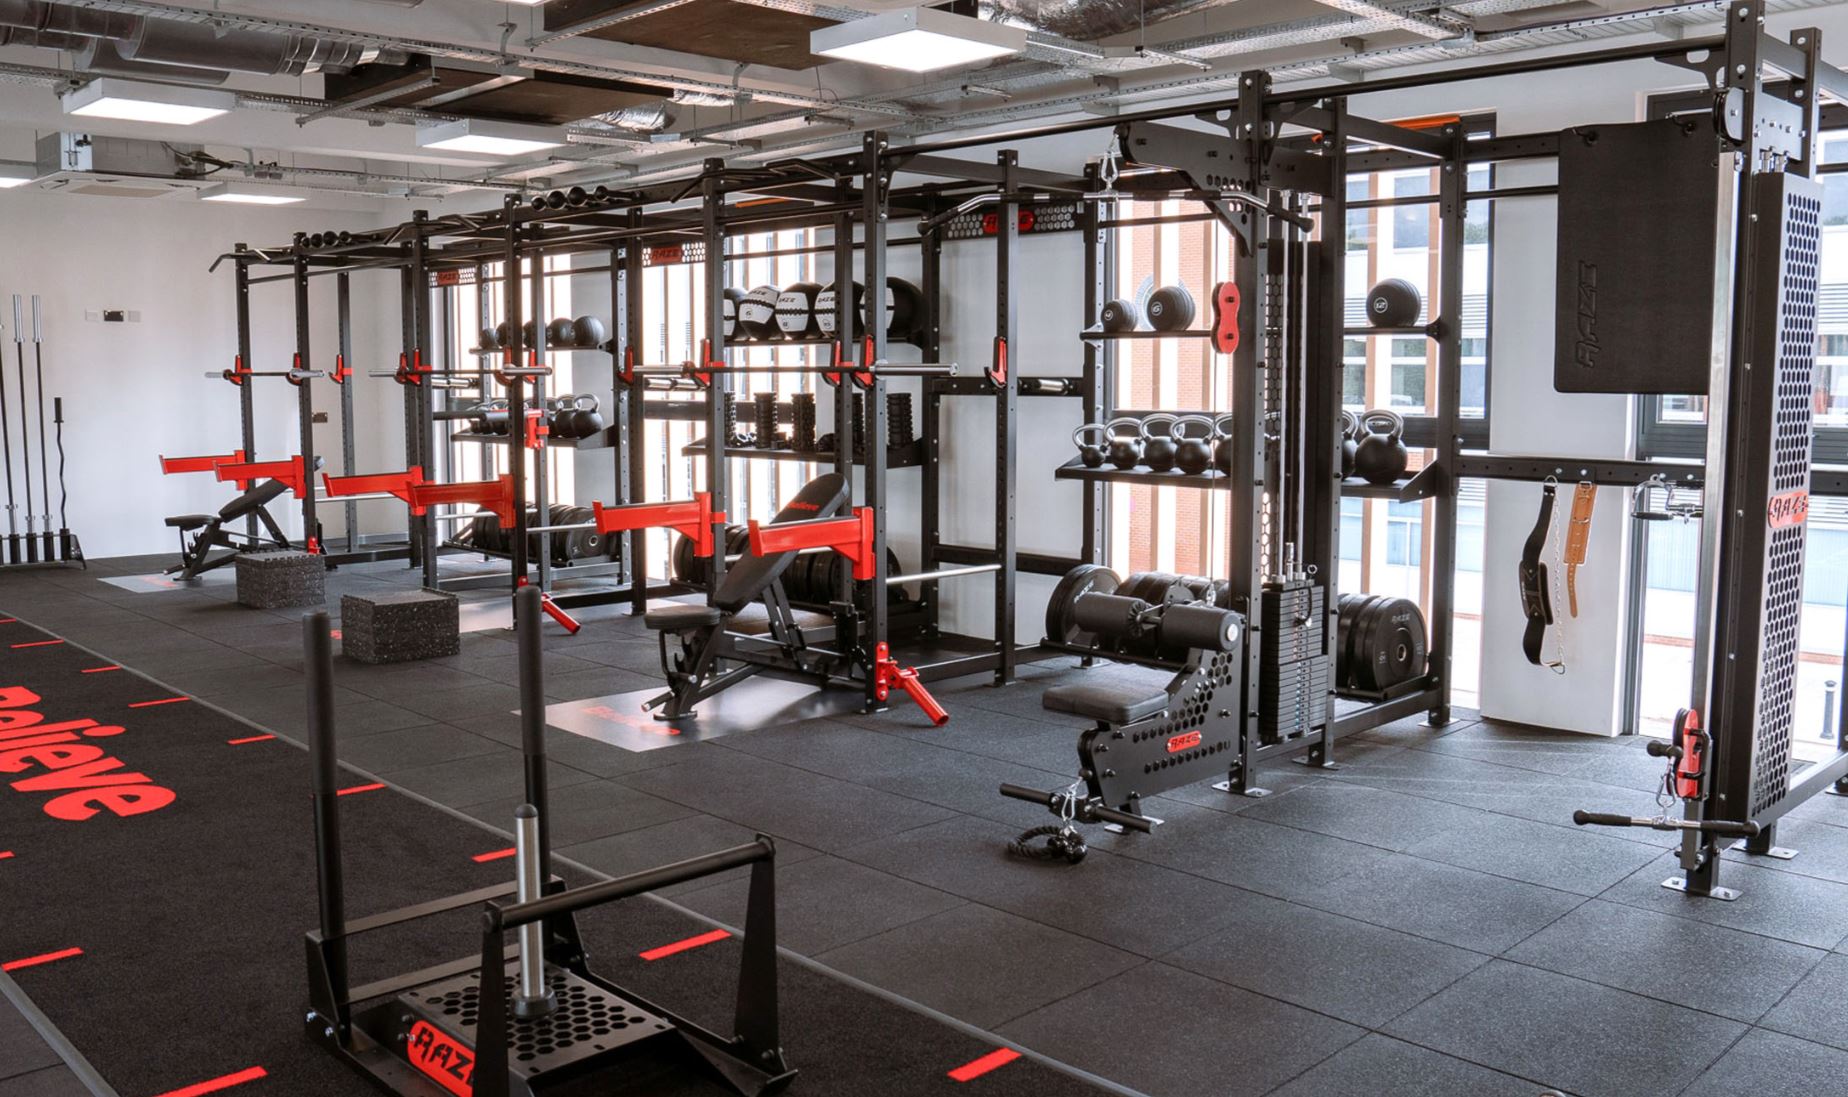 Rubber Gym Flooring Rolls - Premium Commercial Gym Room Flooring